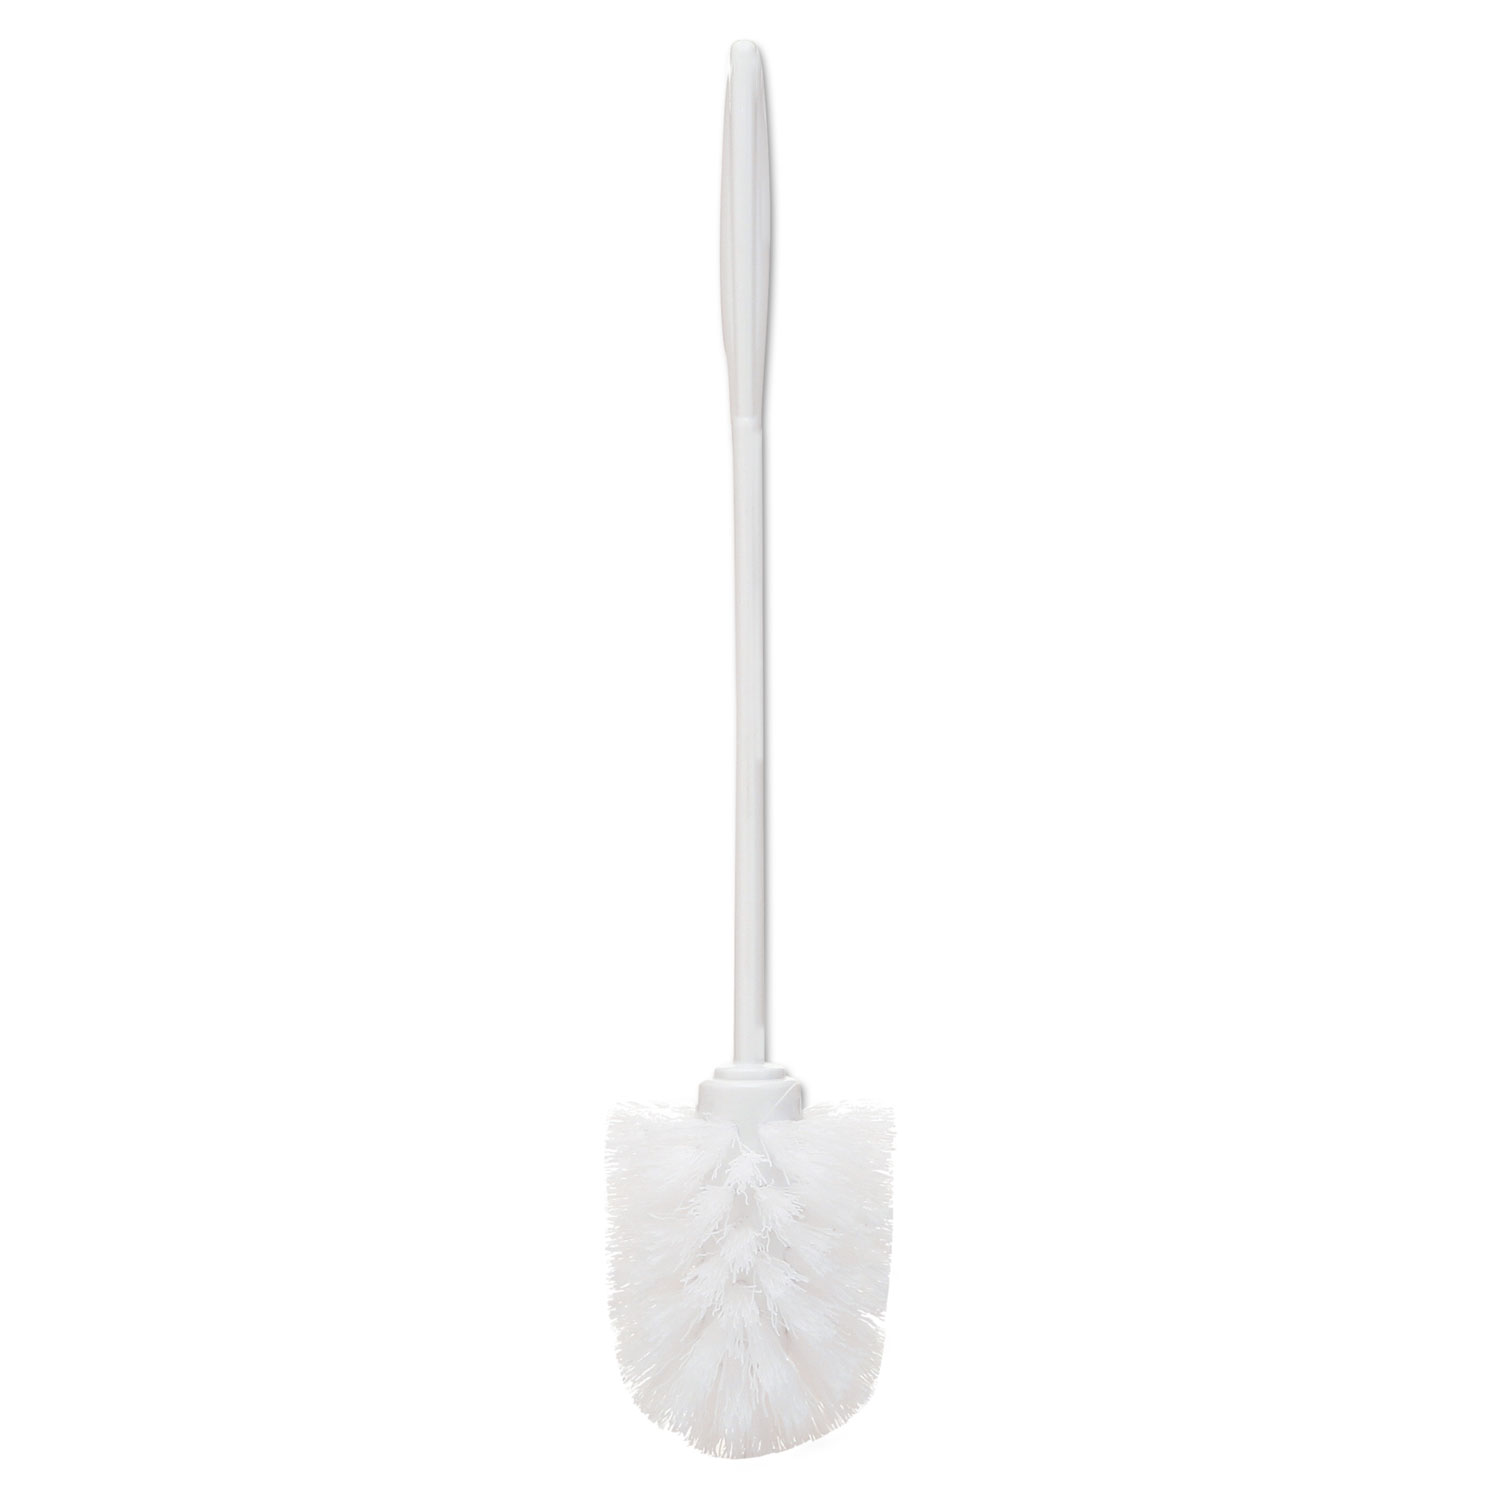  Rubbermaid Commercial FG631000WHT Toilet Bowl Brush, 14 1/2, White, Plastic, 24/Carton (RCP631000WECT) 